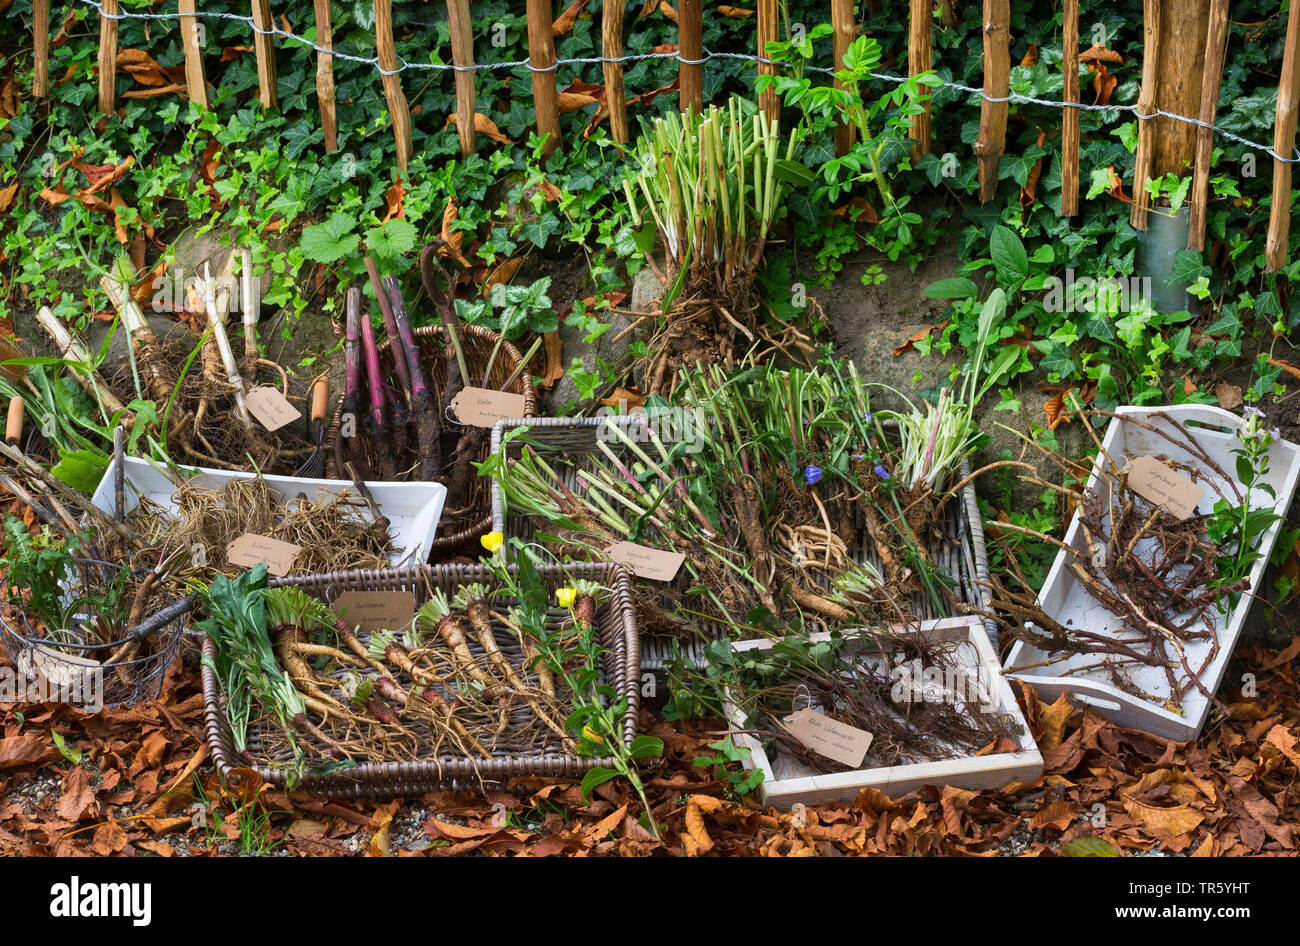 harvestig of roots of differen wild plants, Germany Stock Photo